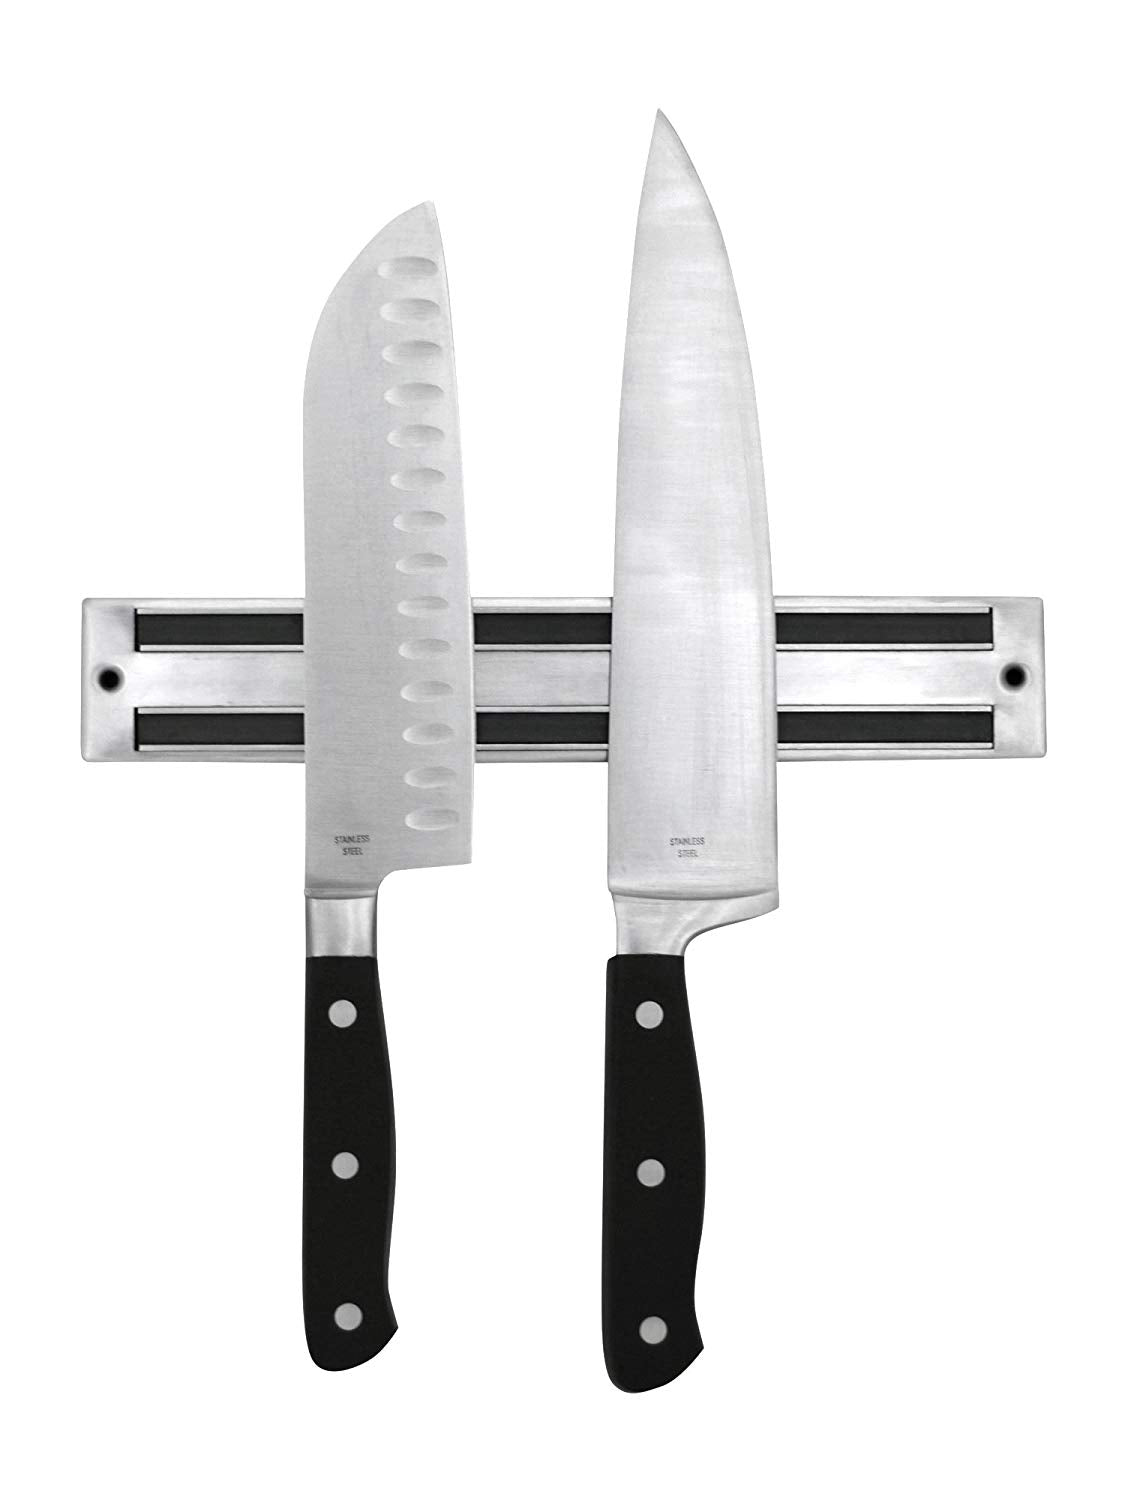 totalElement 13.5 Inch Magnetic Knife Bar, Professional Grade Magnetic Knife Holder, Stainless Steel Knife Rack Strip